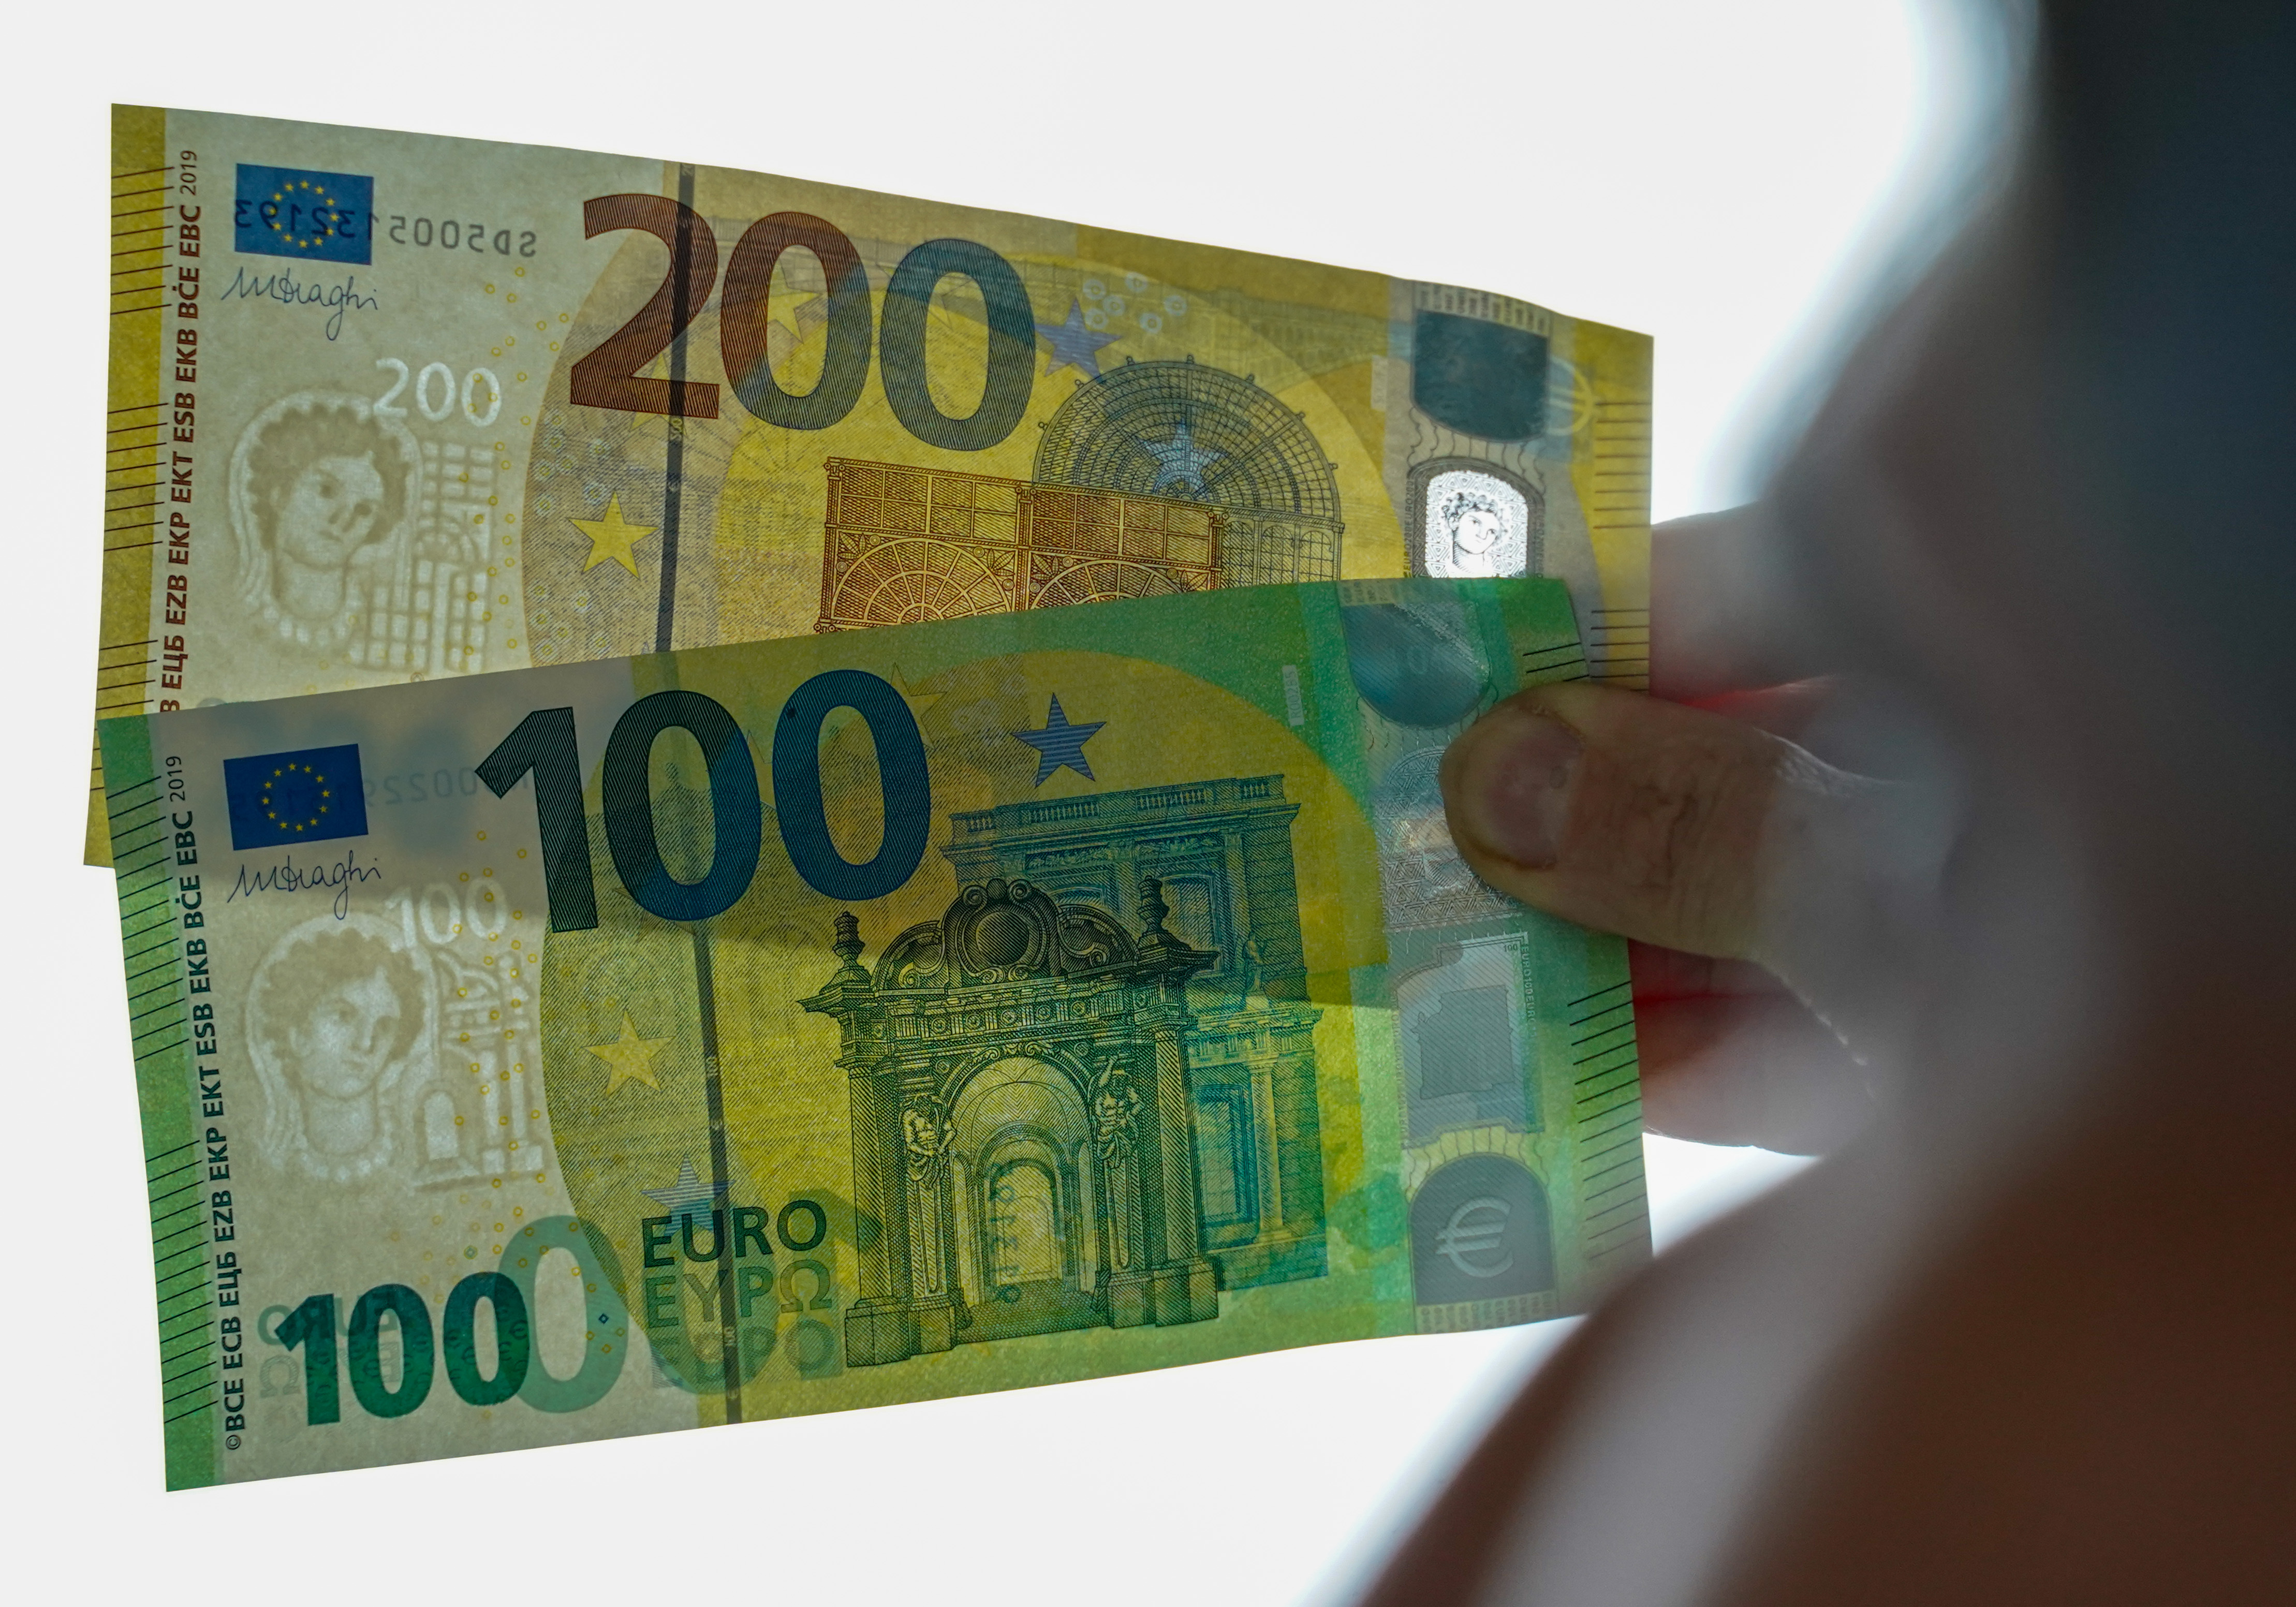 Крупная купюра евро. Евро банкноты номинал 200. Купюра 200 евро. Банкноты 100 евро. Новая купюра 100 евро.